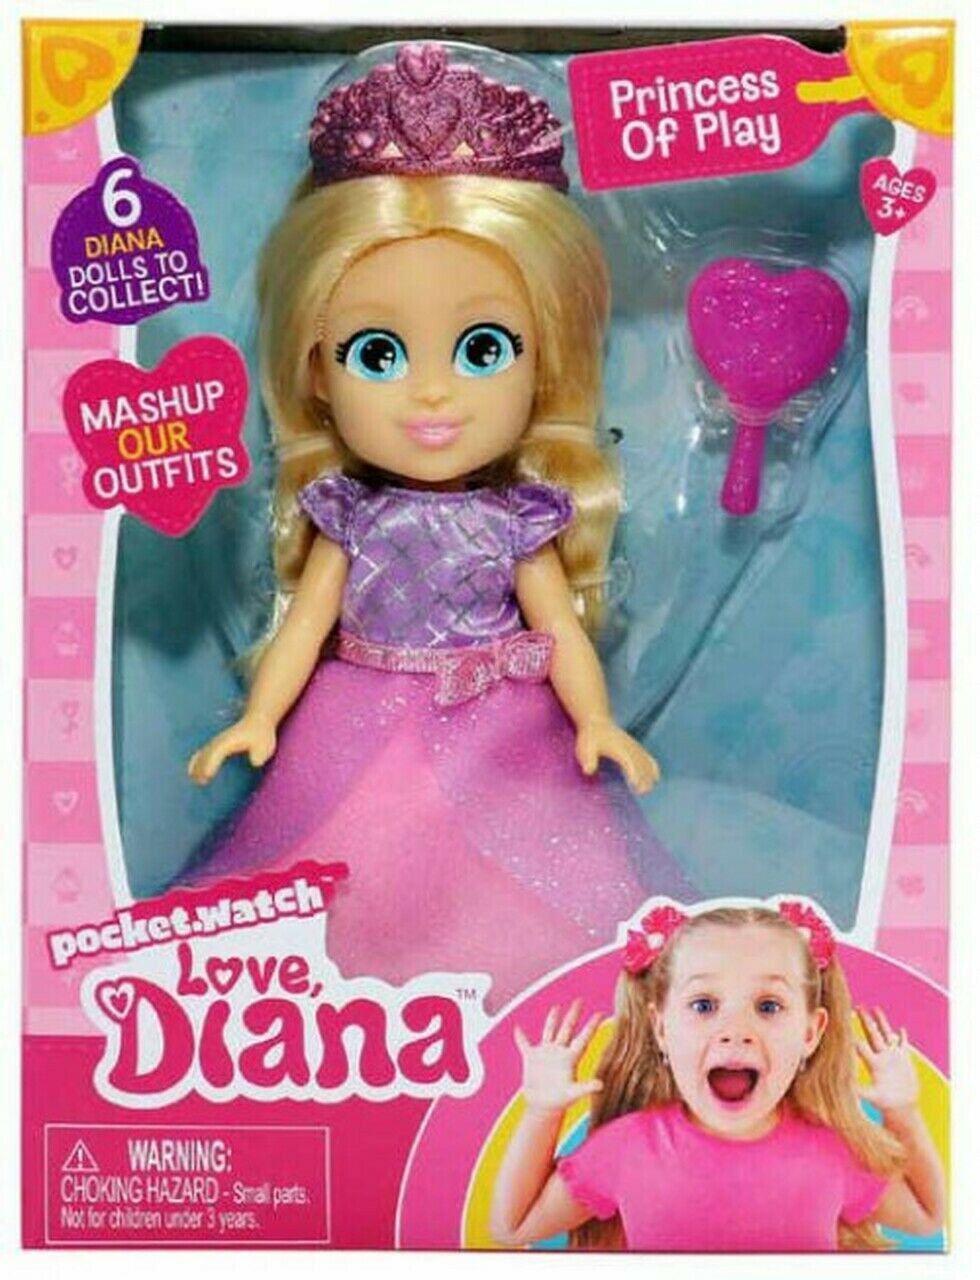 Love Diana Princess of Play Pocket Watch Doll by Headstart YouTube Kids Diana